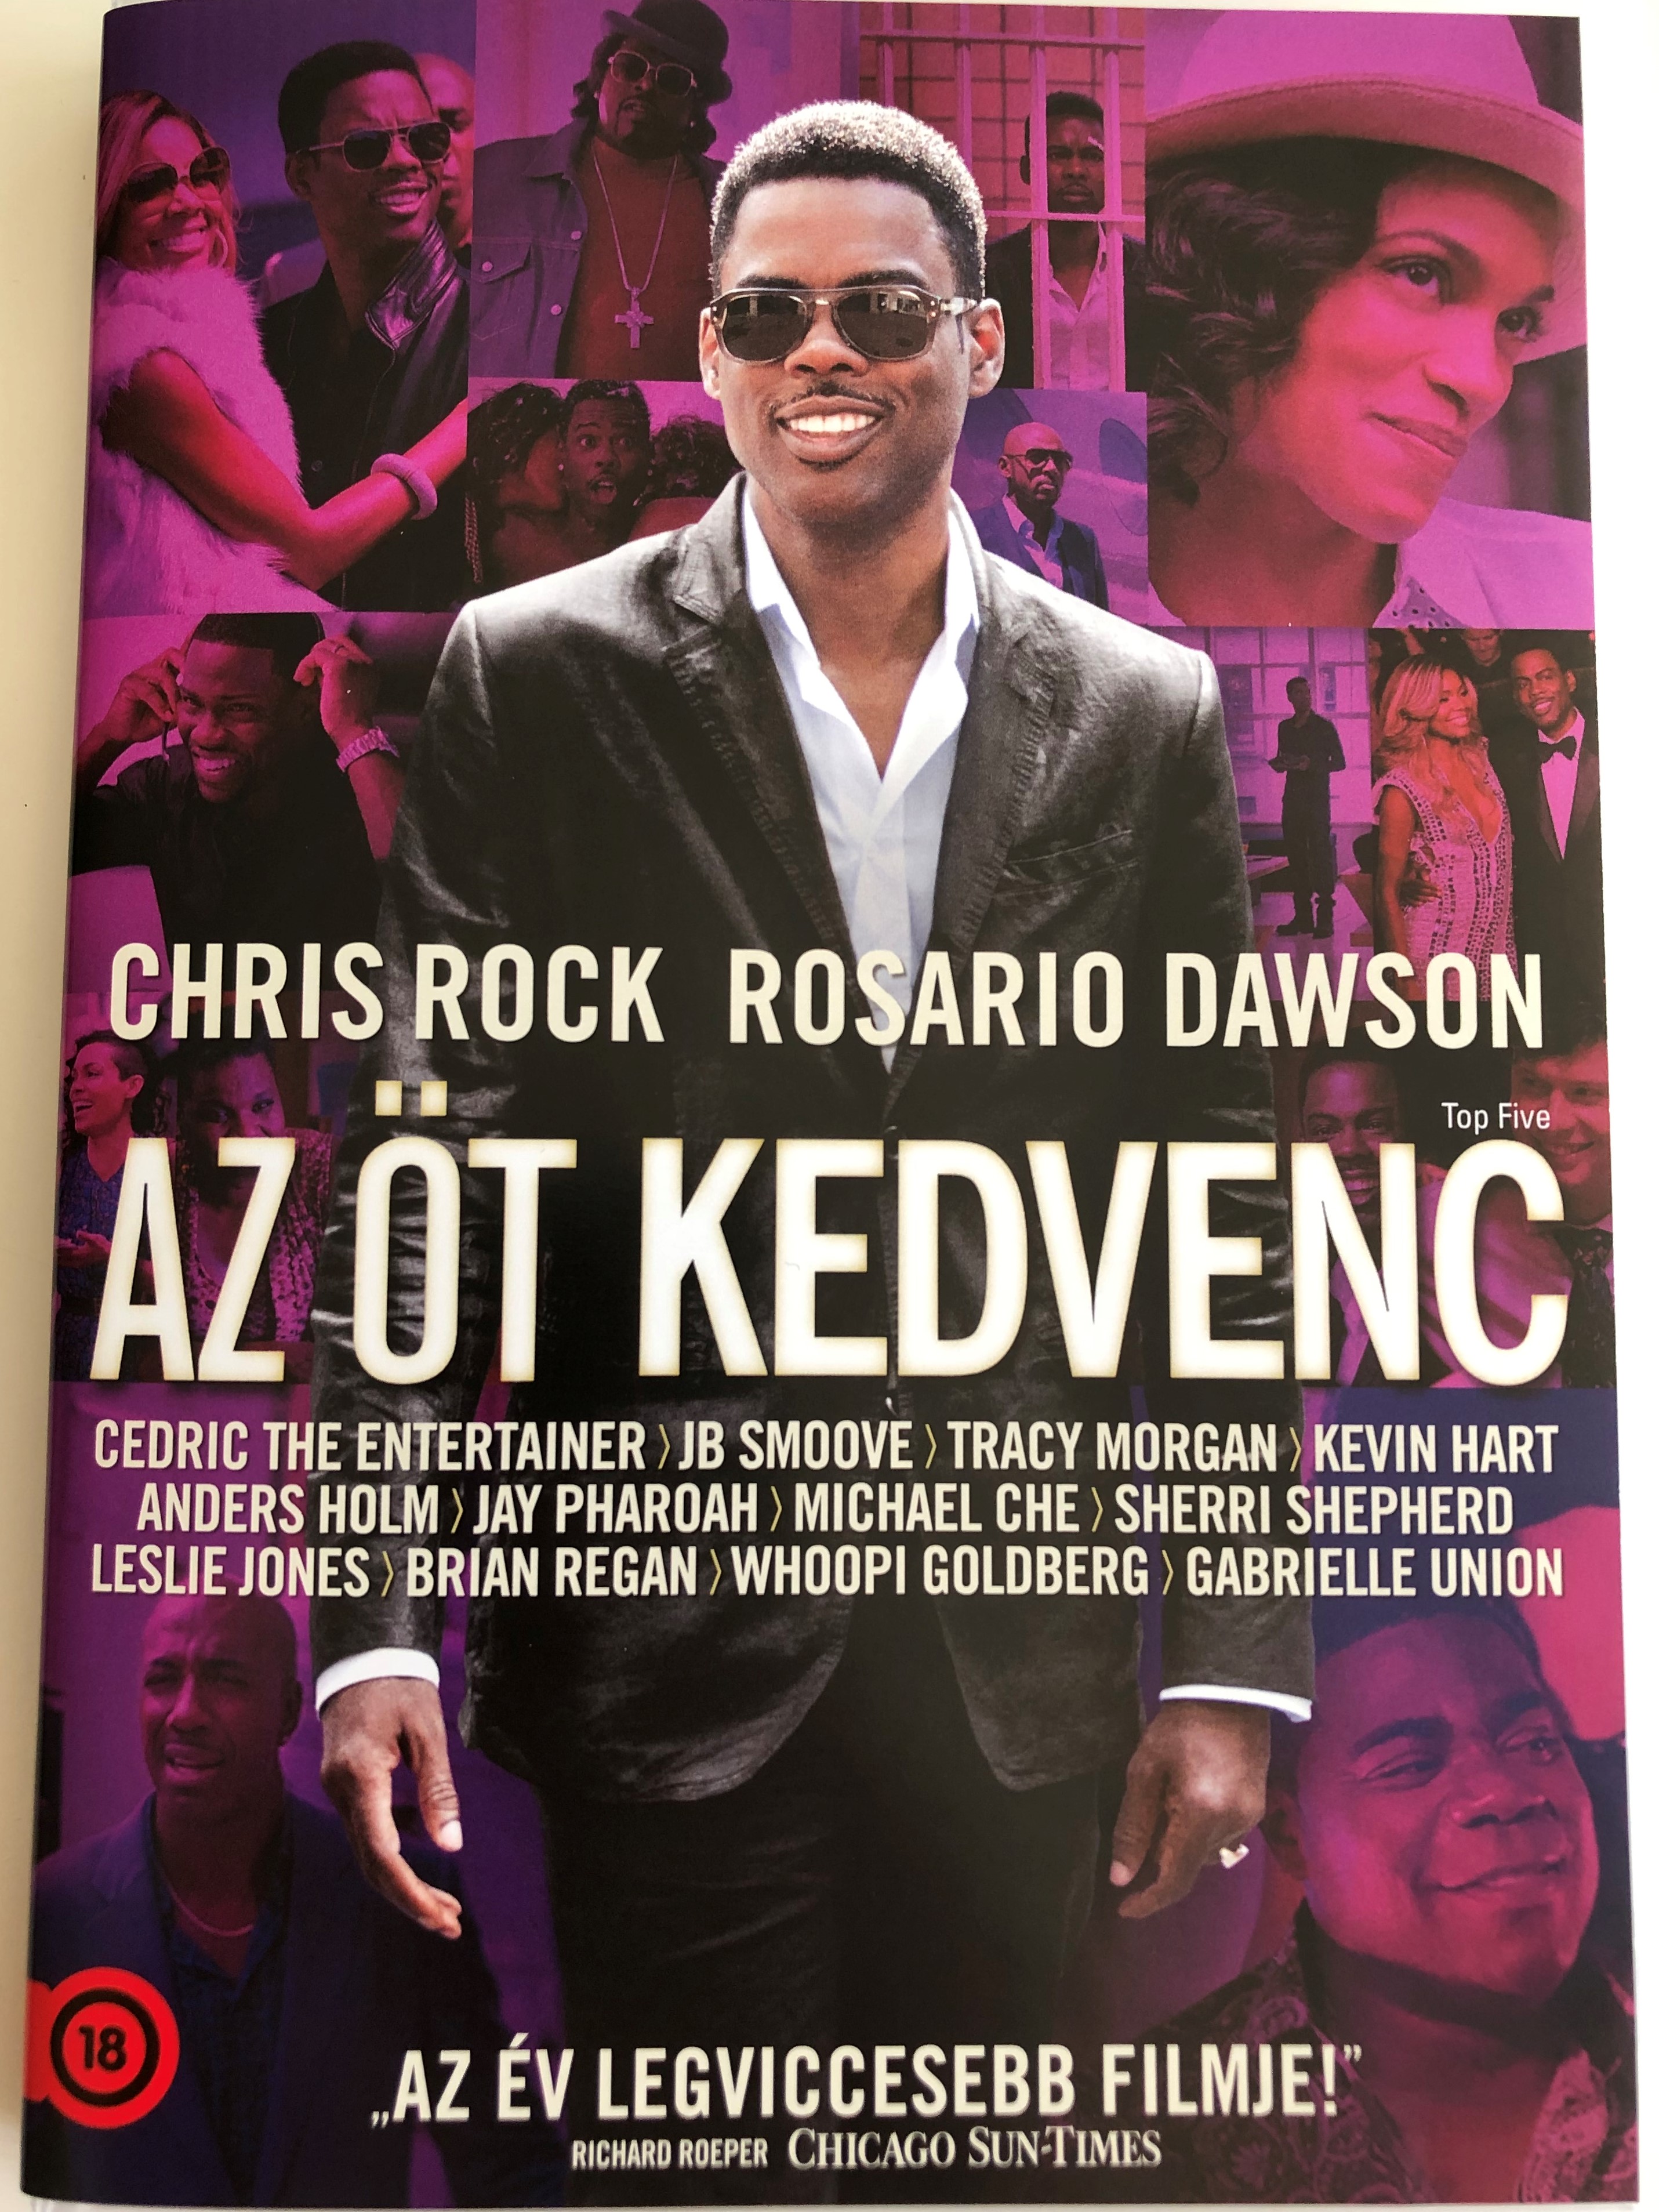 top-five-dvd-2014-az-t-kedvenc-directed-and-written-by-chris-rock-starring-chris-rock-rosario-dawson-1-.jpg